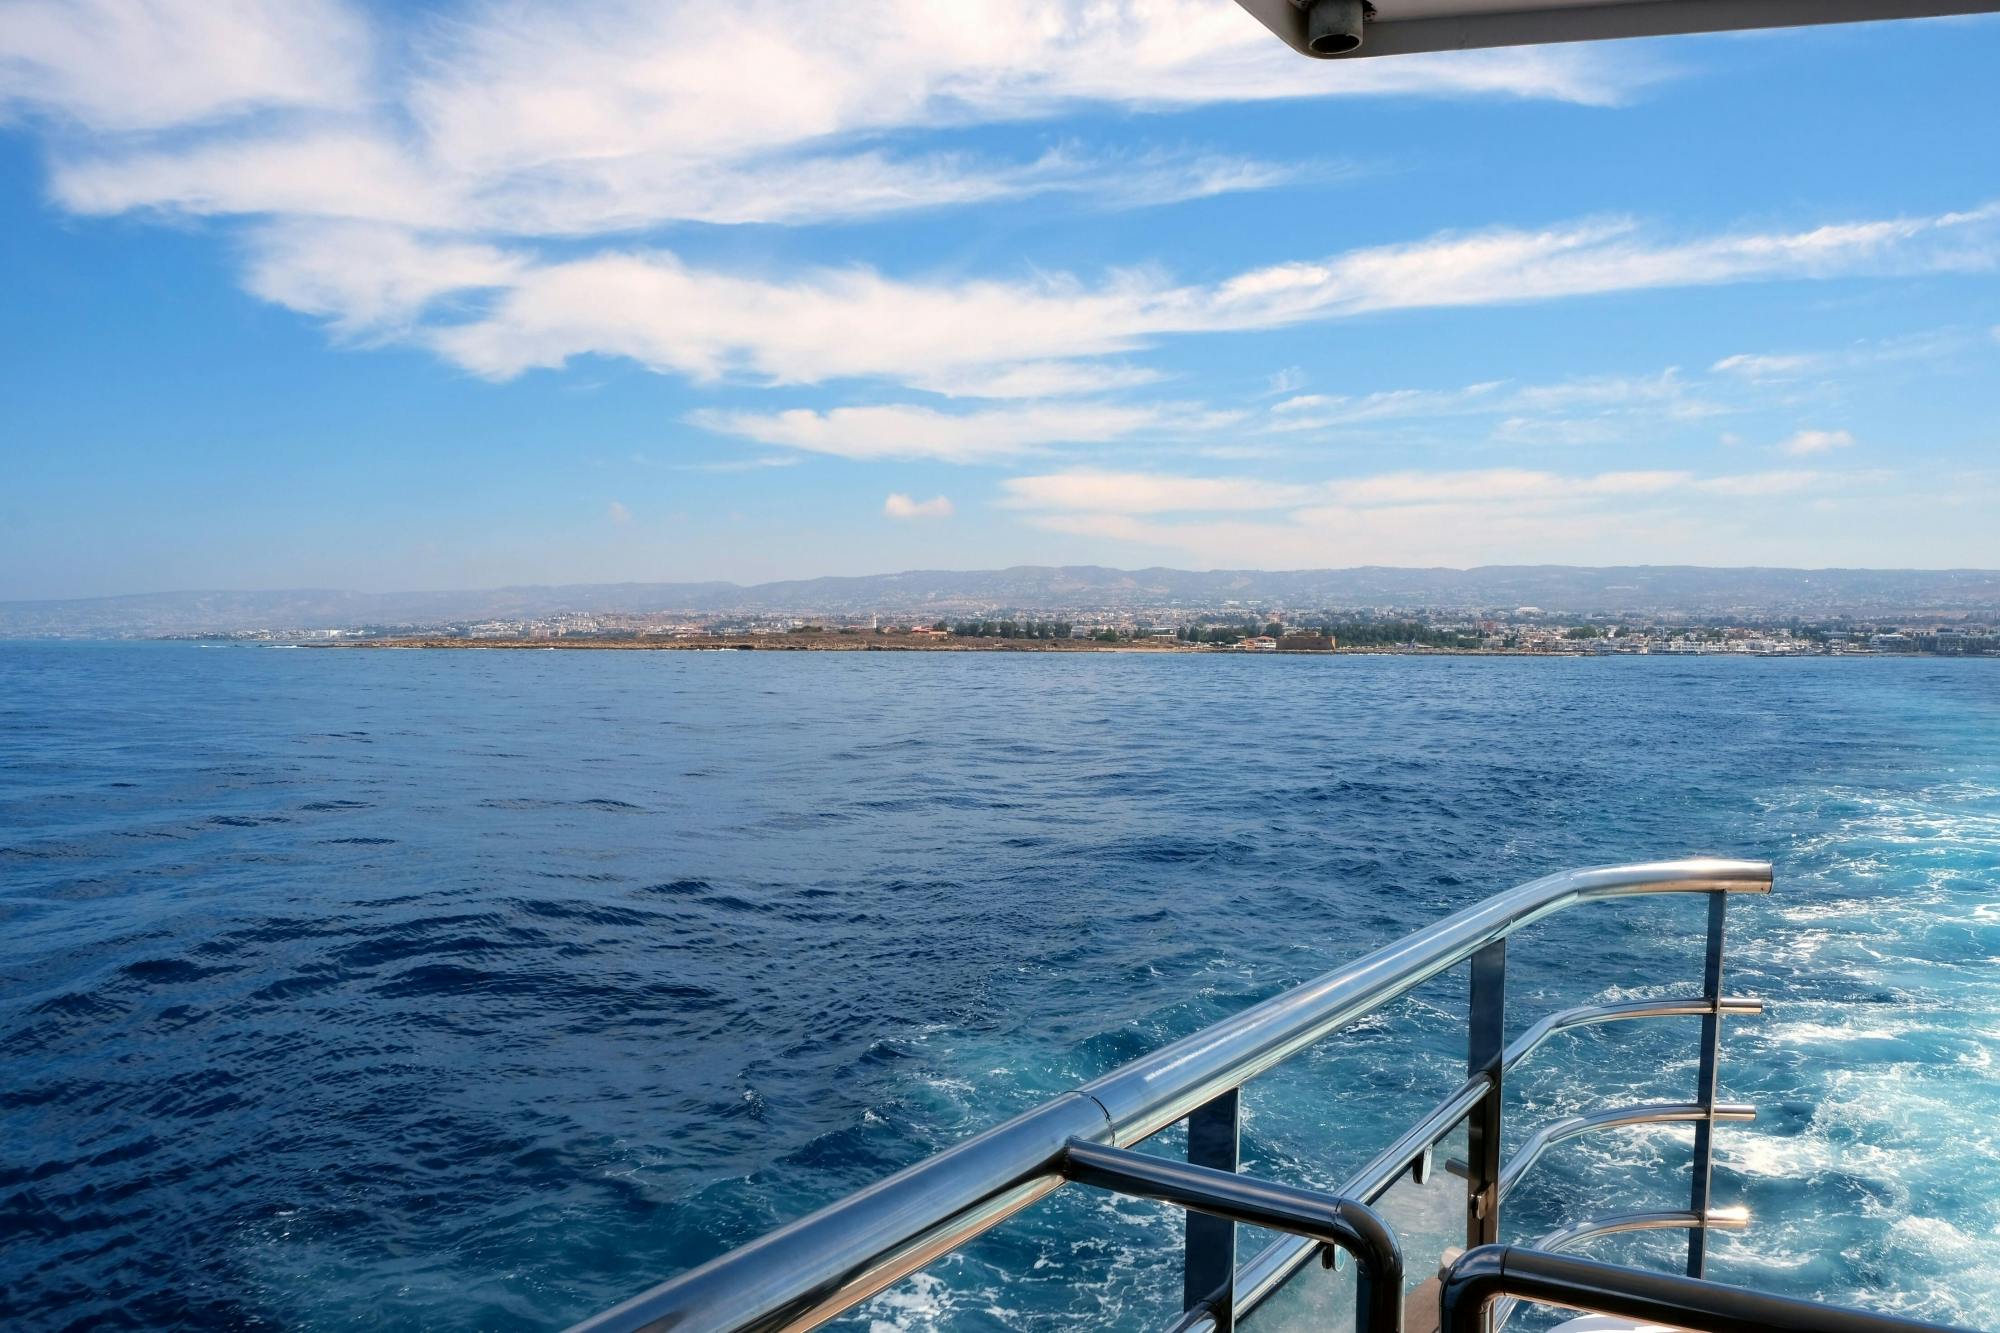 Royal Premier Sunset Cruise on Ocean Vision